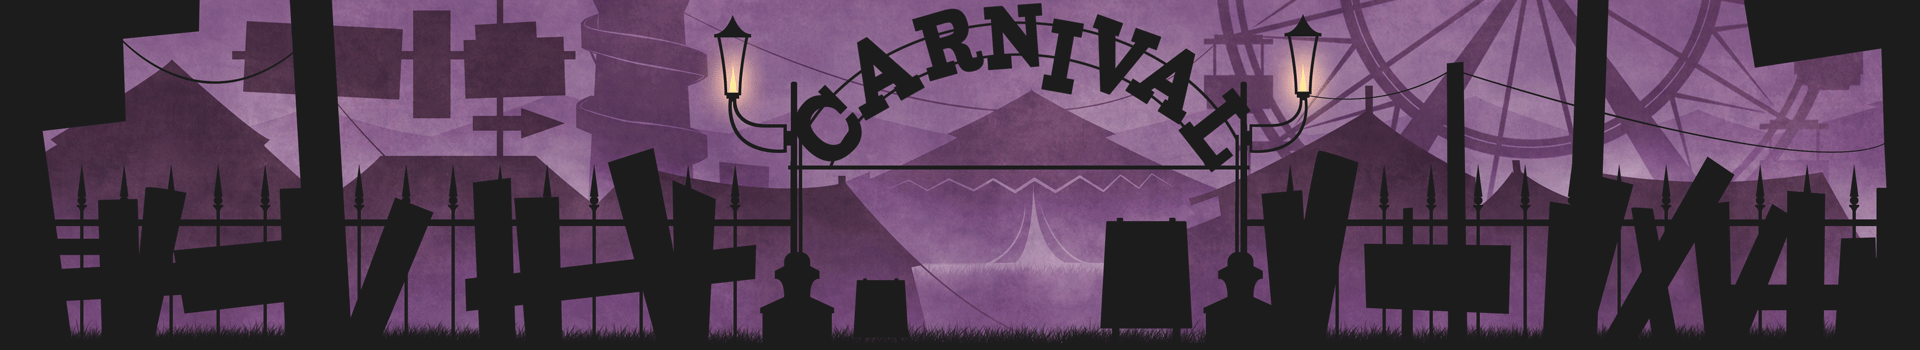 Carnival-header.png